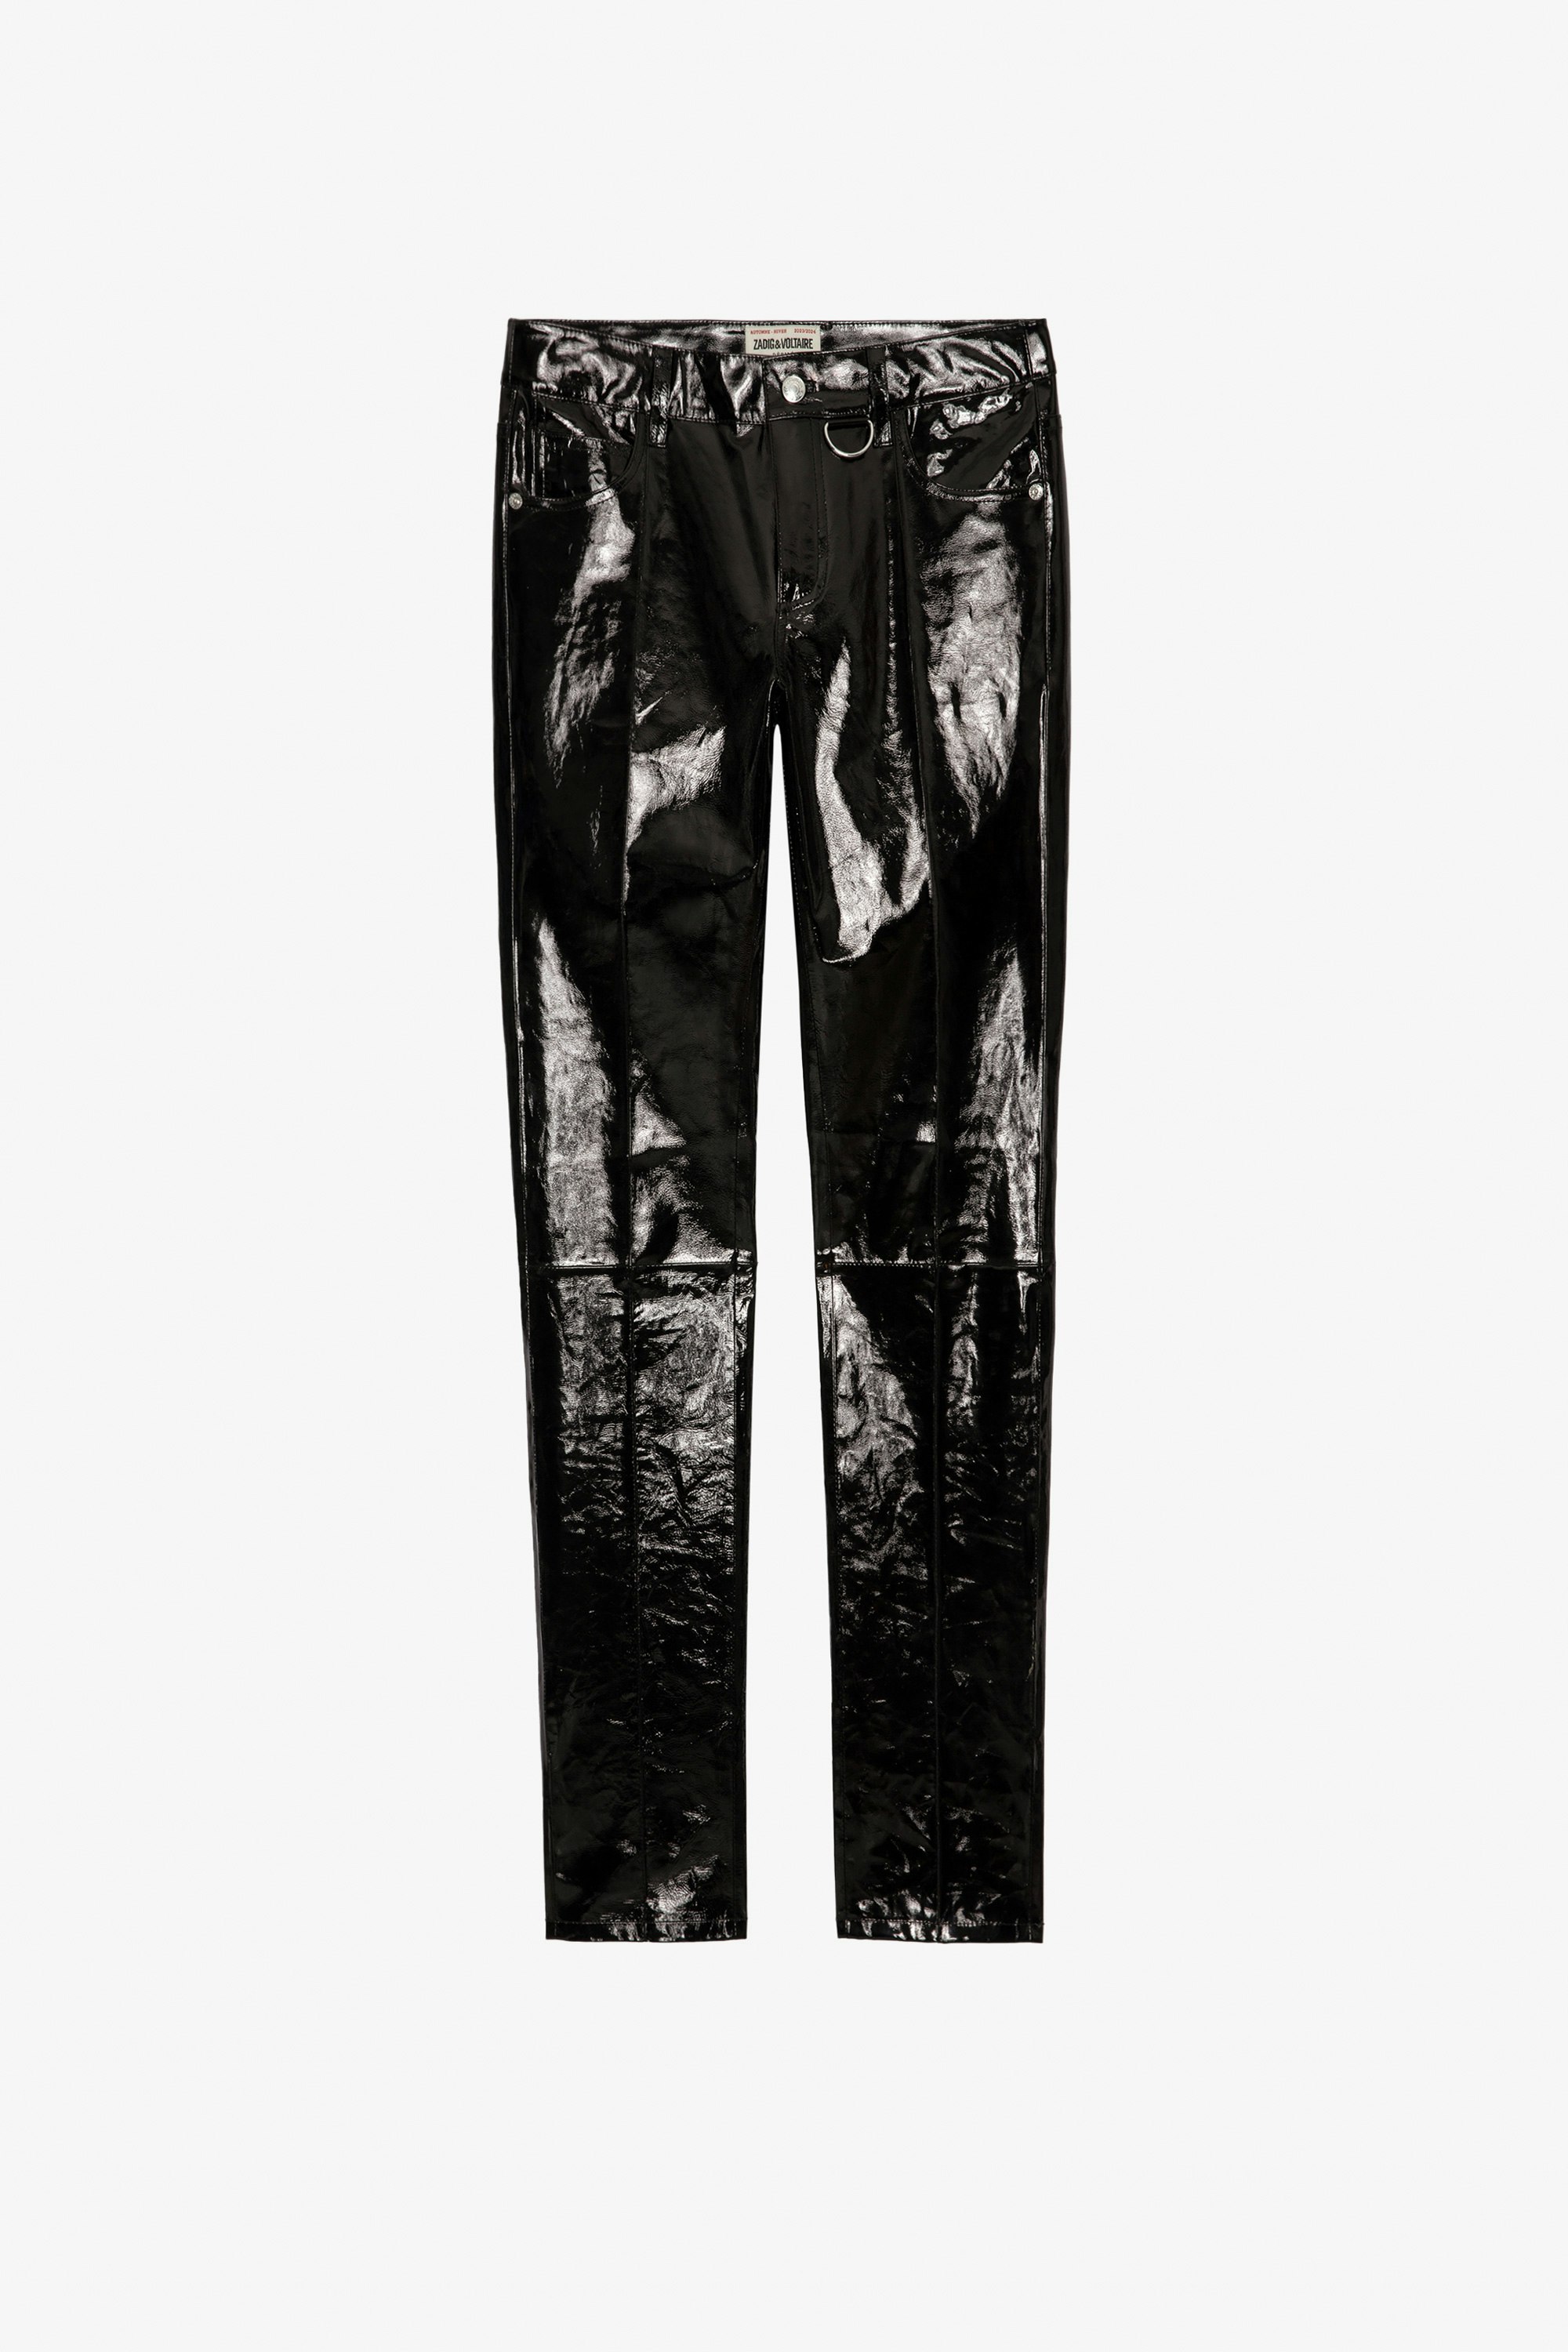 Peko Vinyl Trousers Women’s black vinyl leather trousers.